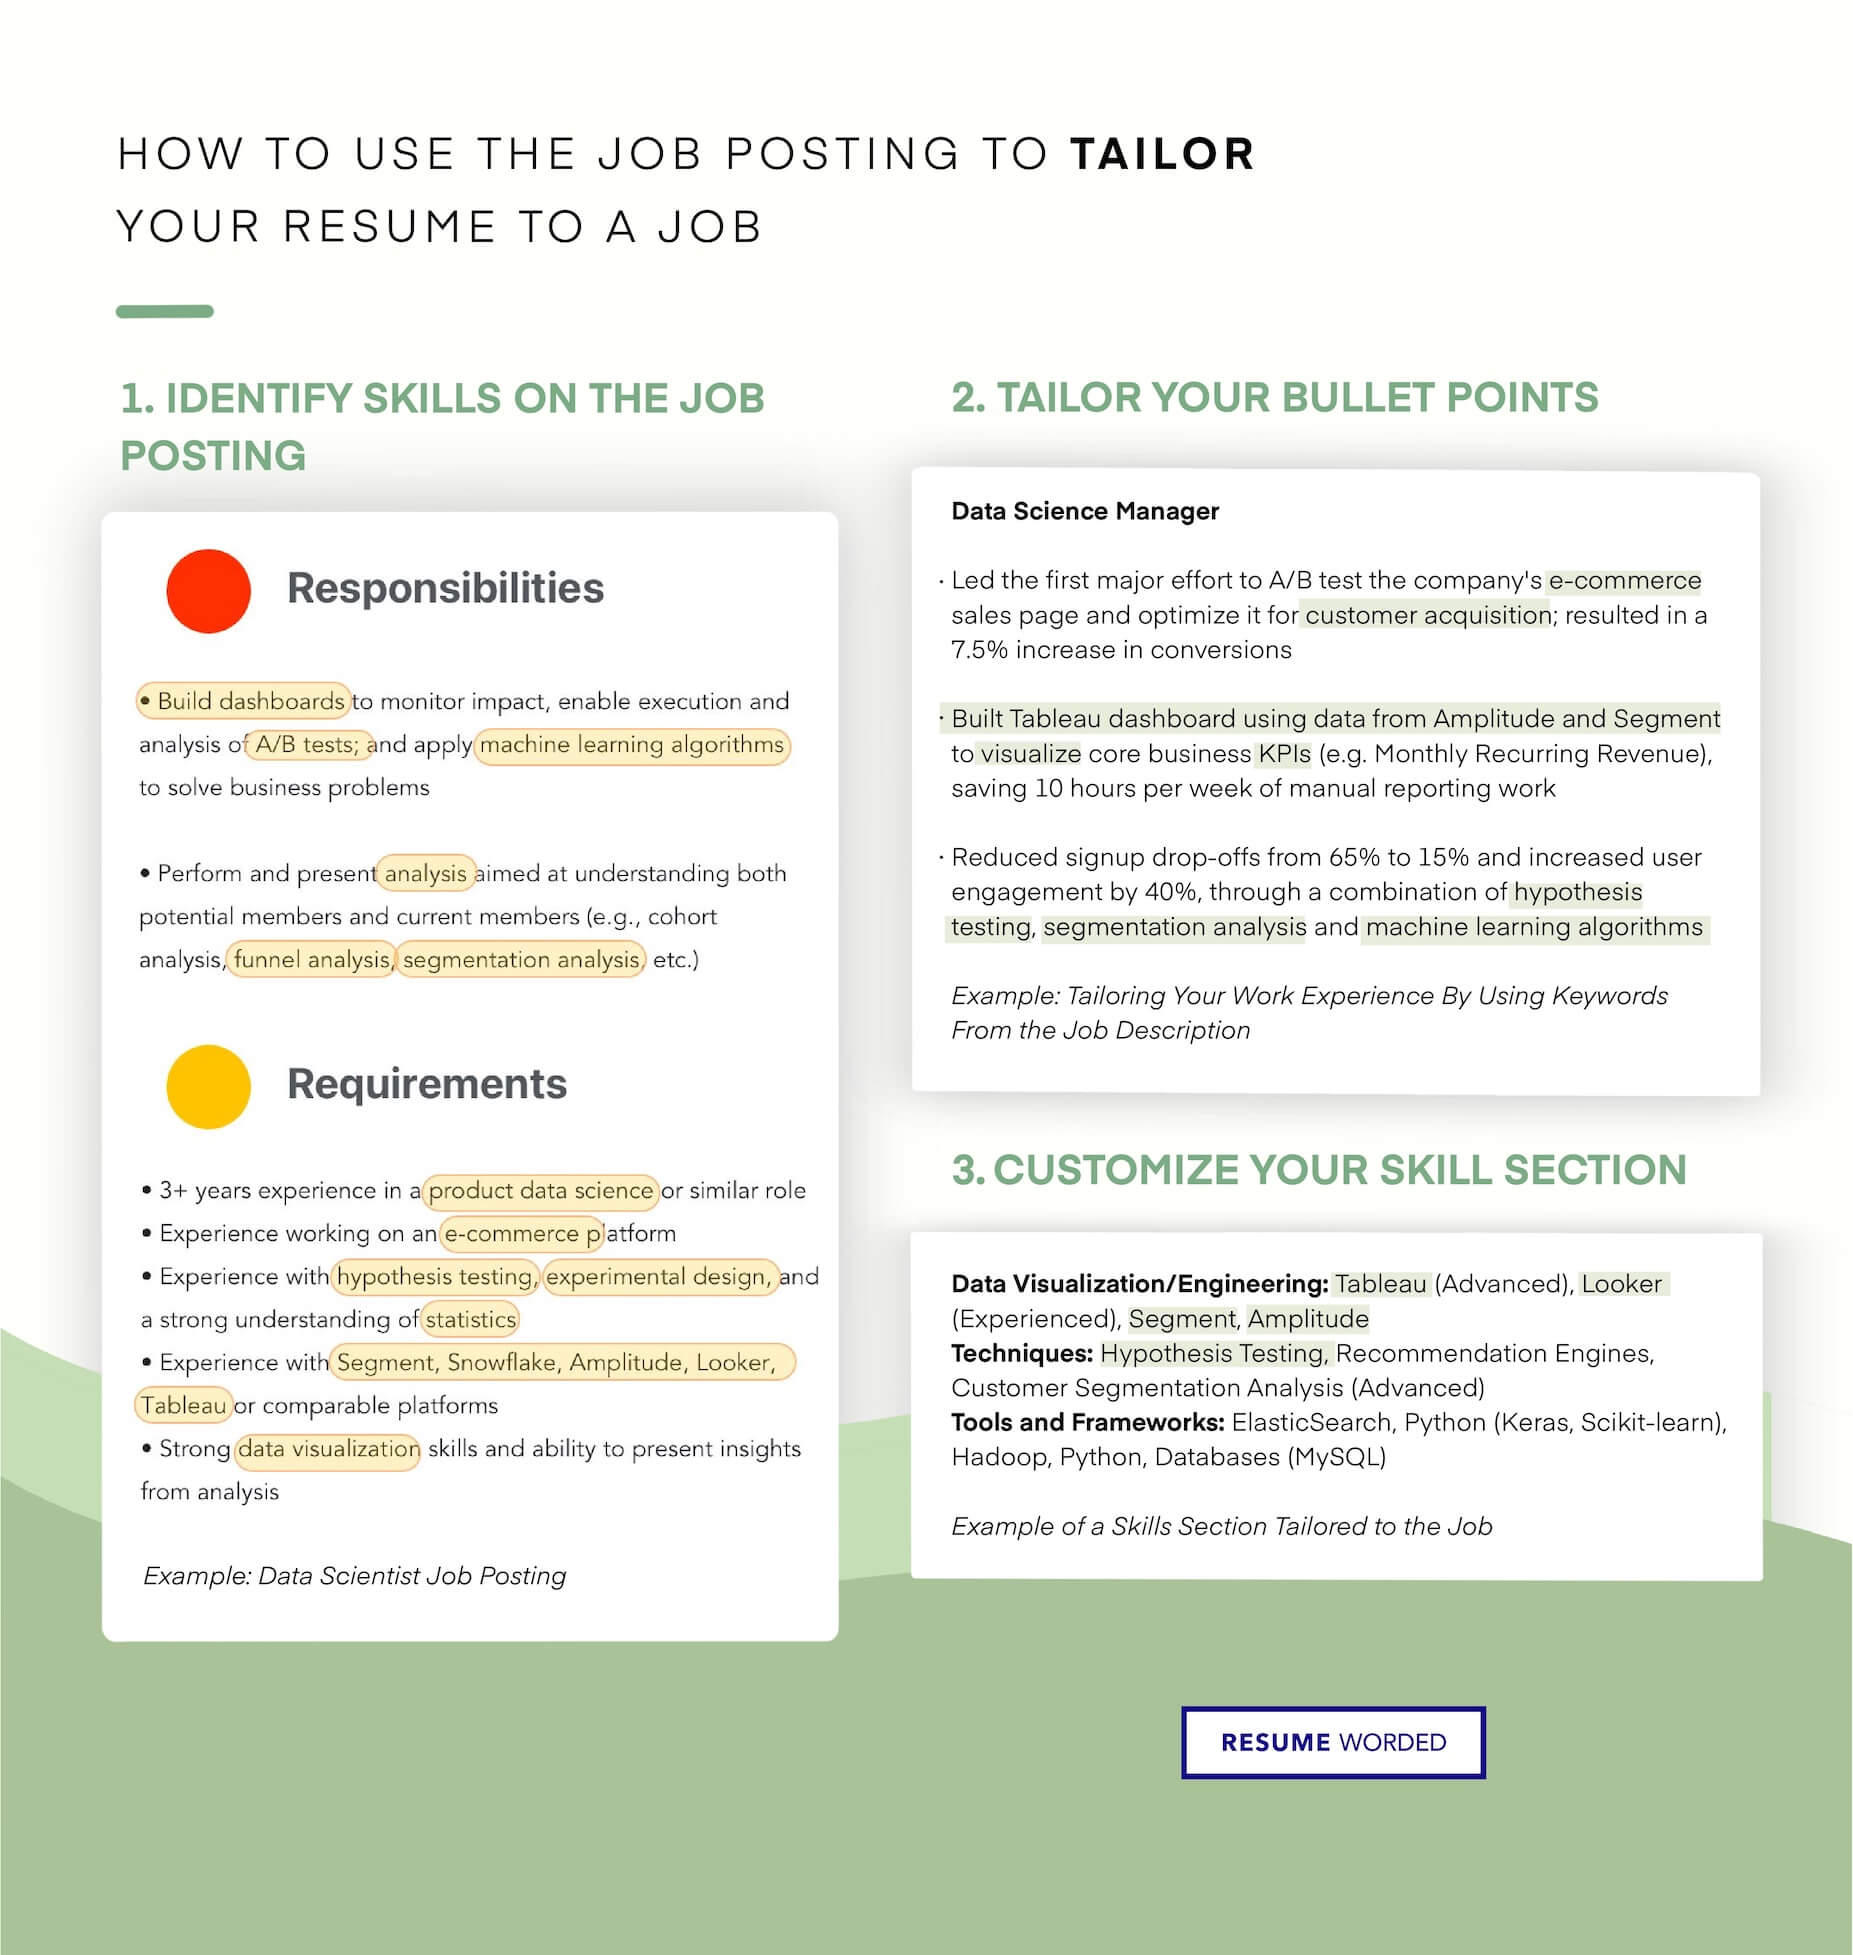 Tailored retail work experience - Sales Associate / Retail Salesperson Resume